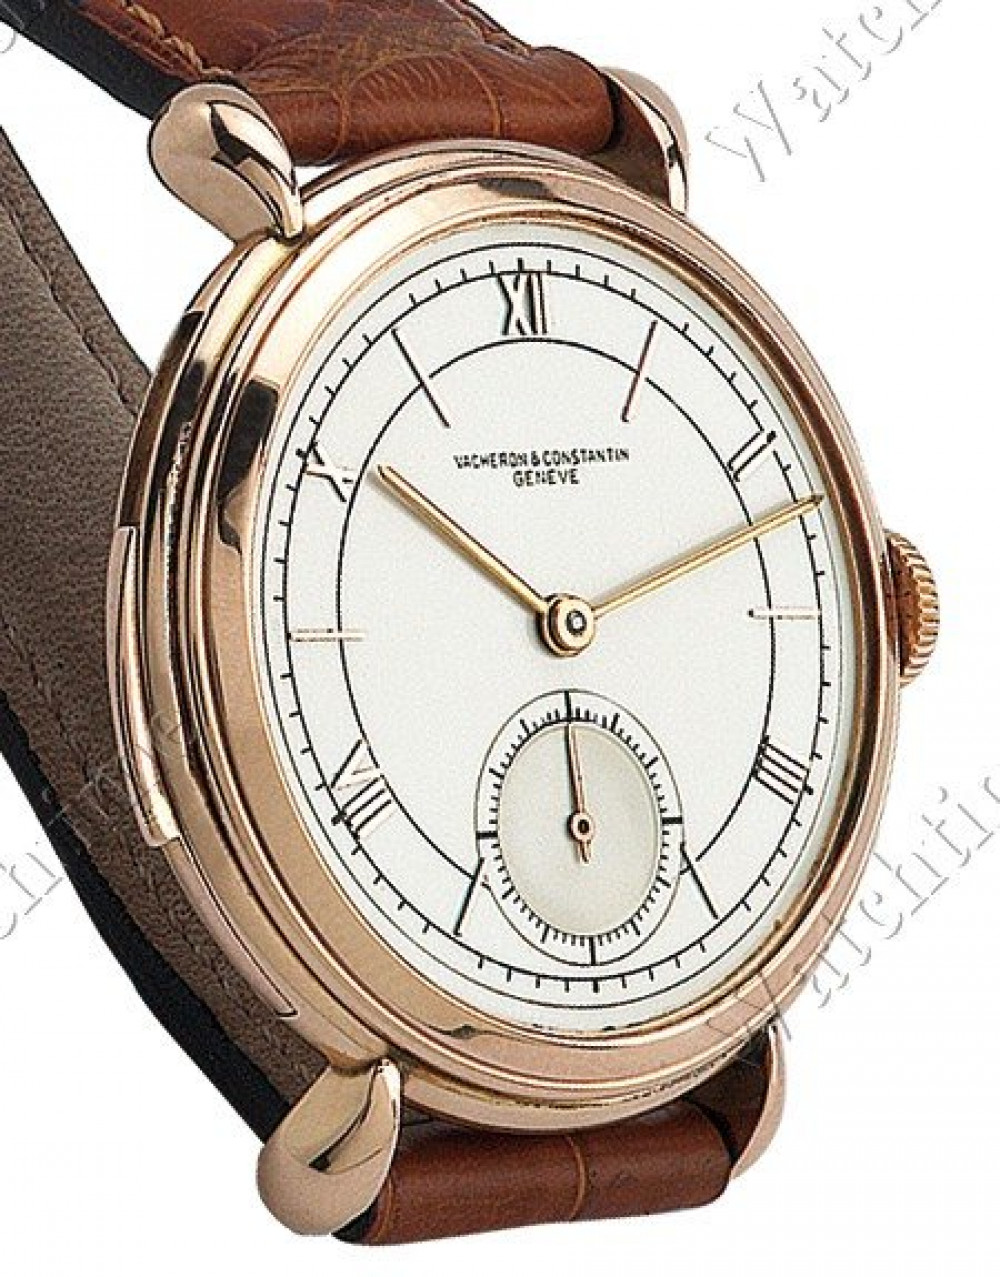 Zegarek firmy Vacheron Constantin, model Minutenrepetiton von 1941